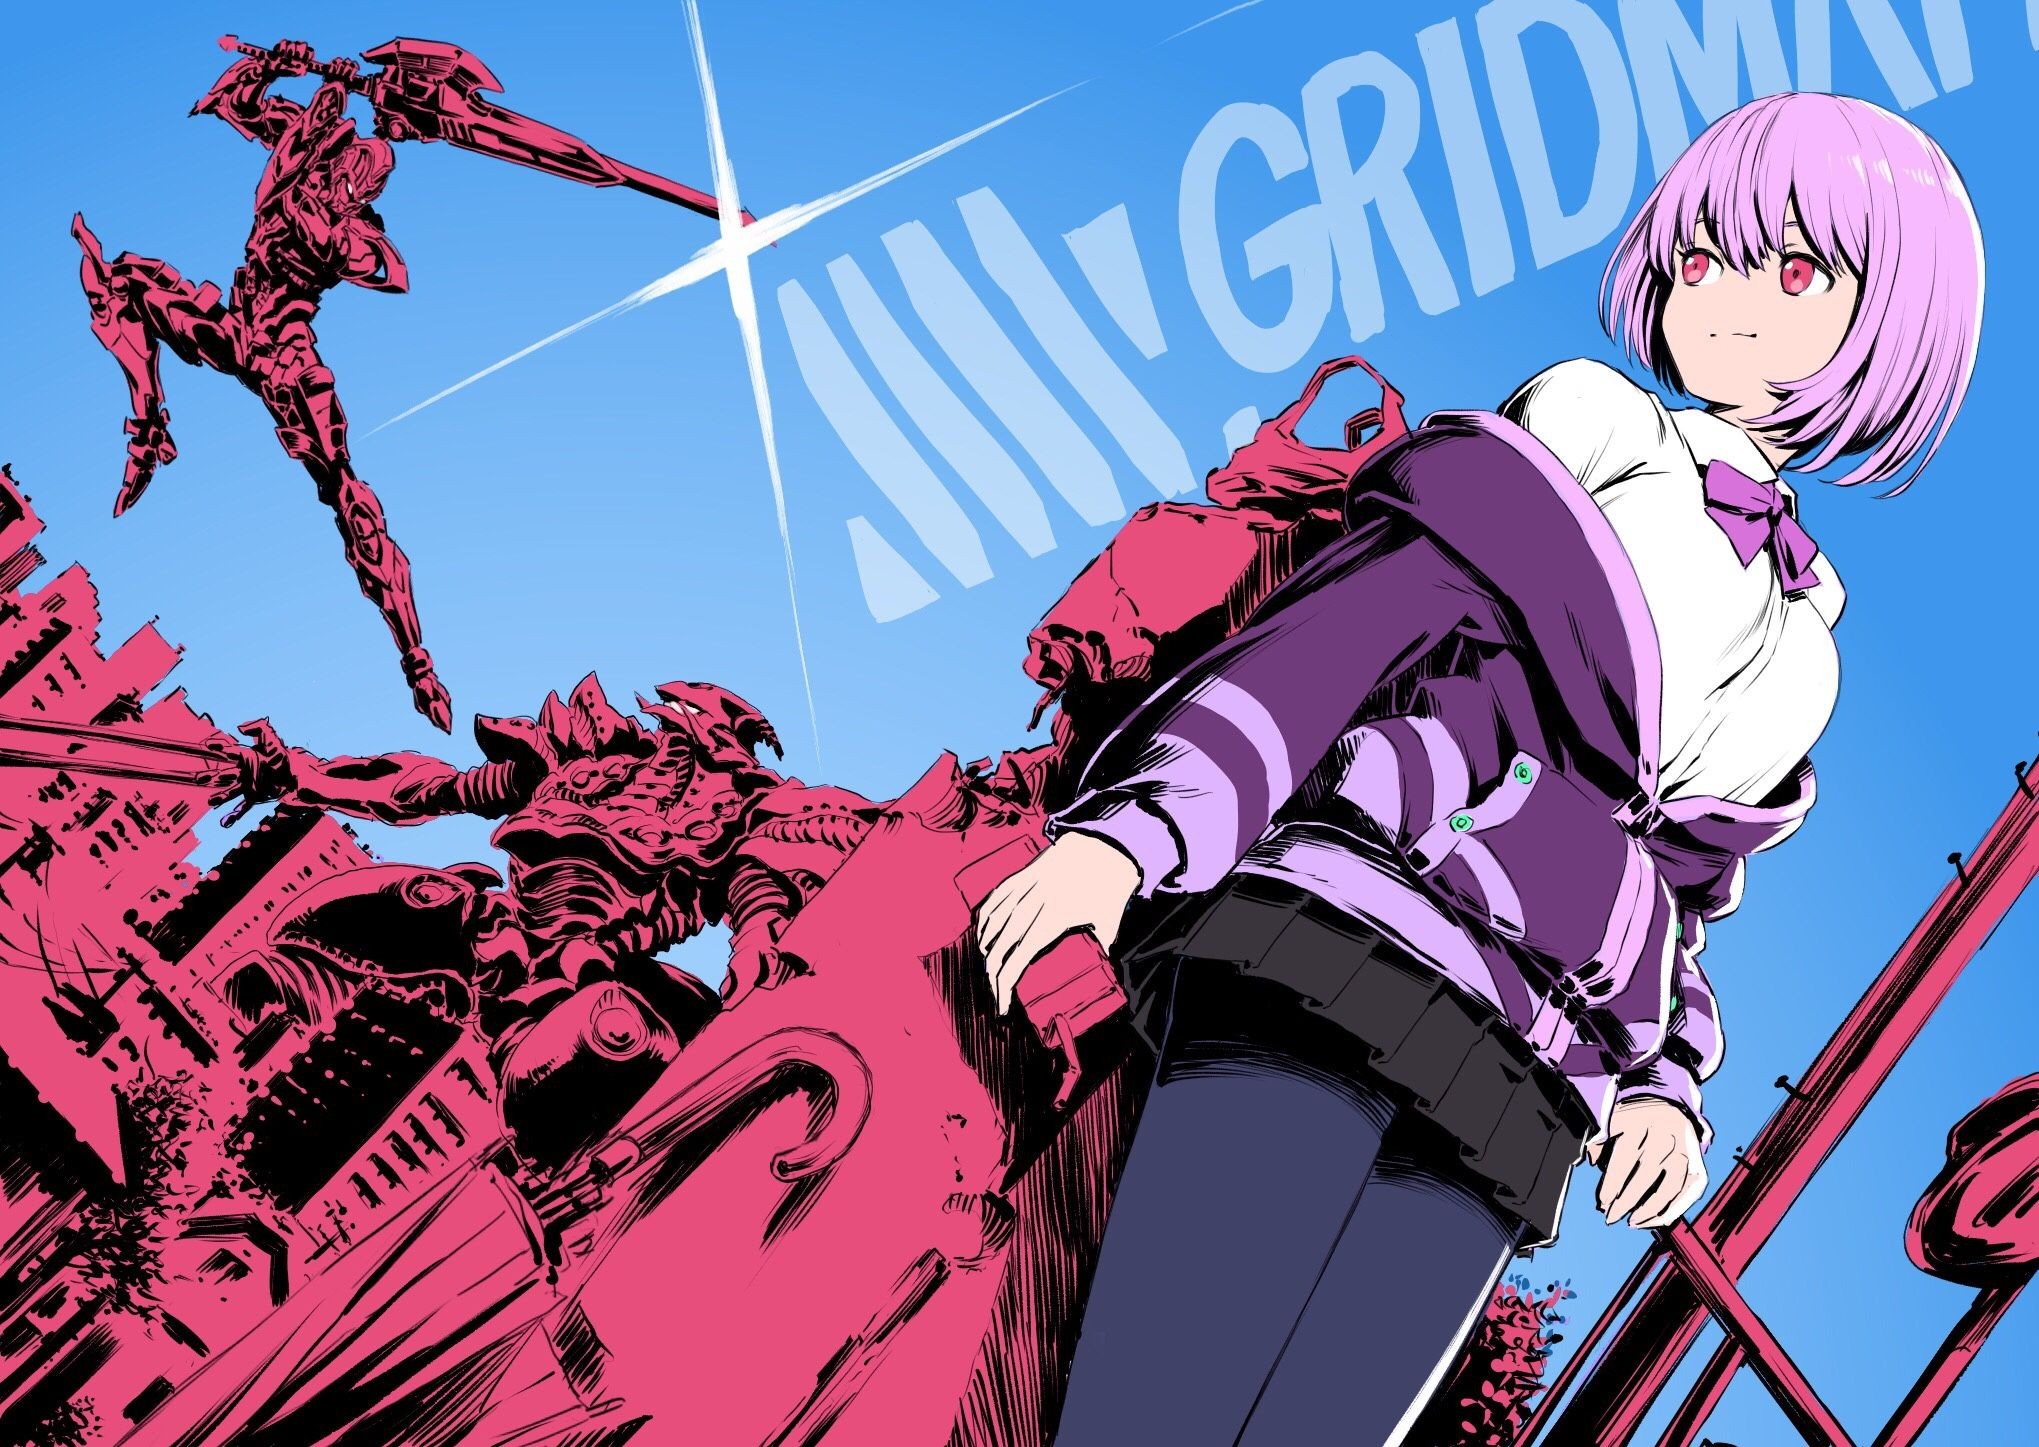 GRIDMAN UNIVERSE (Anime) - TV Tropes